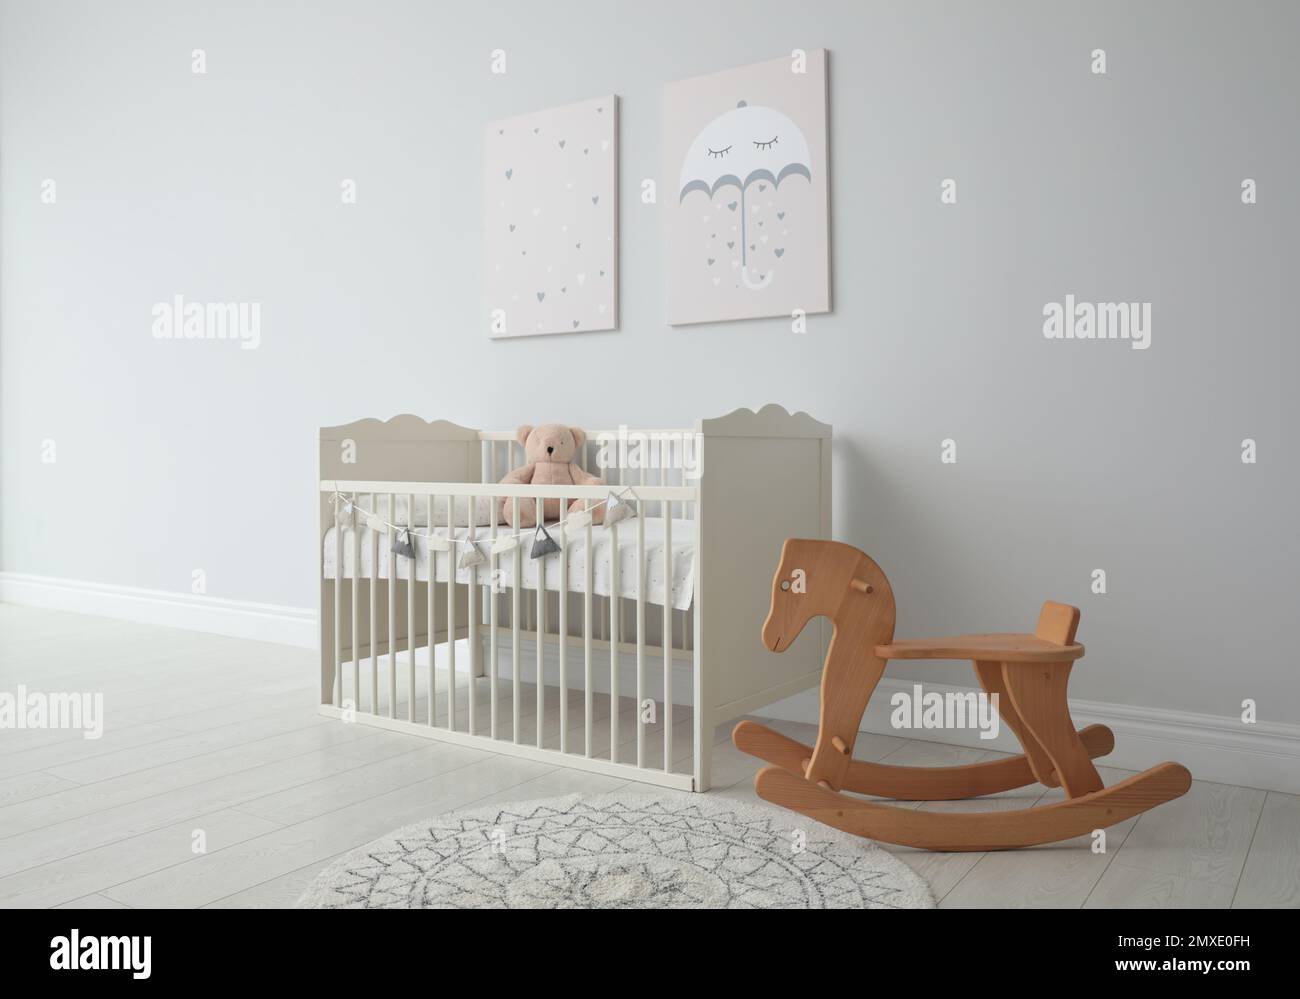 Minimalist room interior with baby crib, decor elements and toys Stock Photo